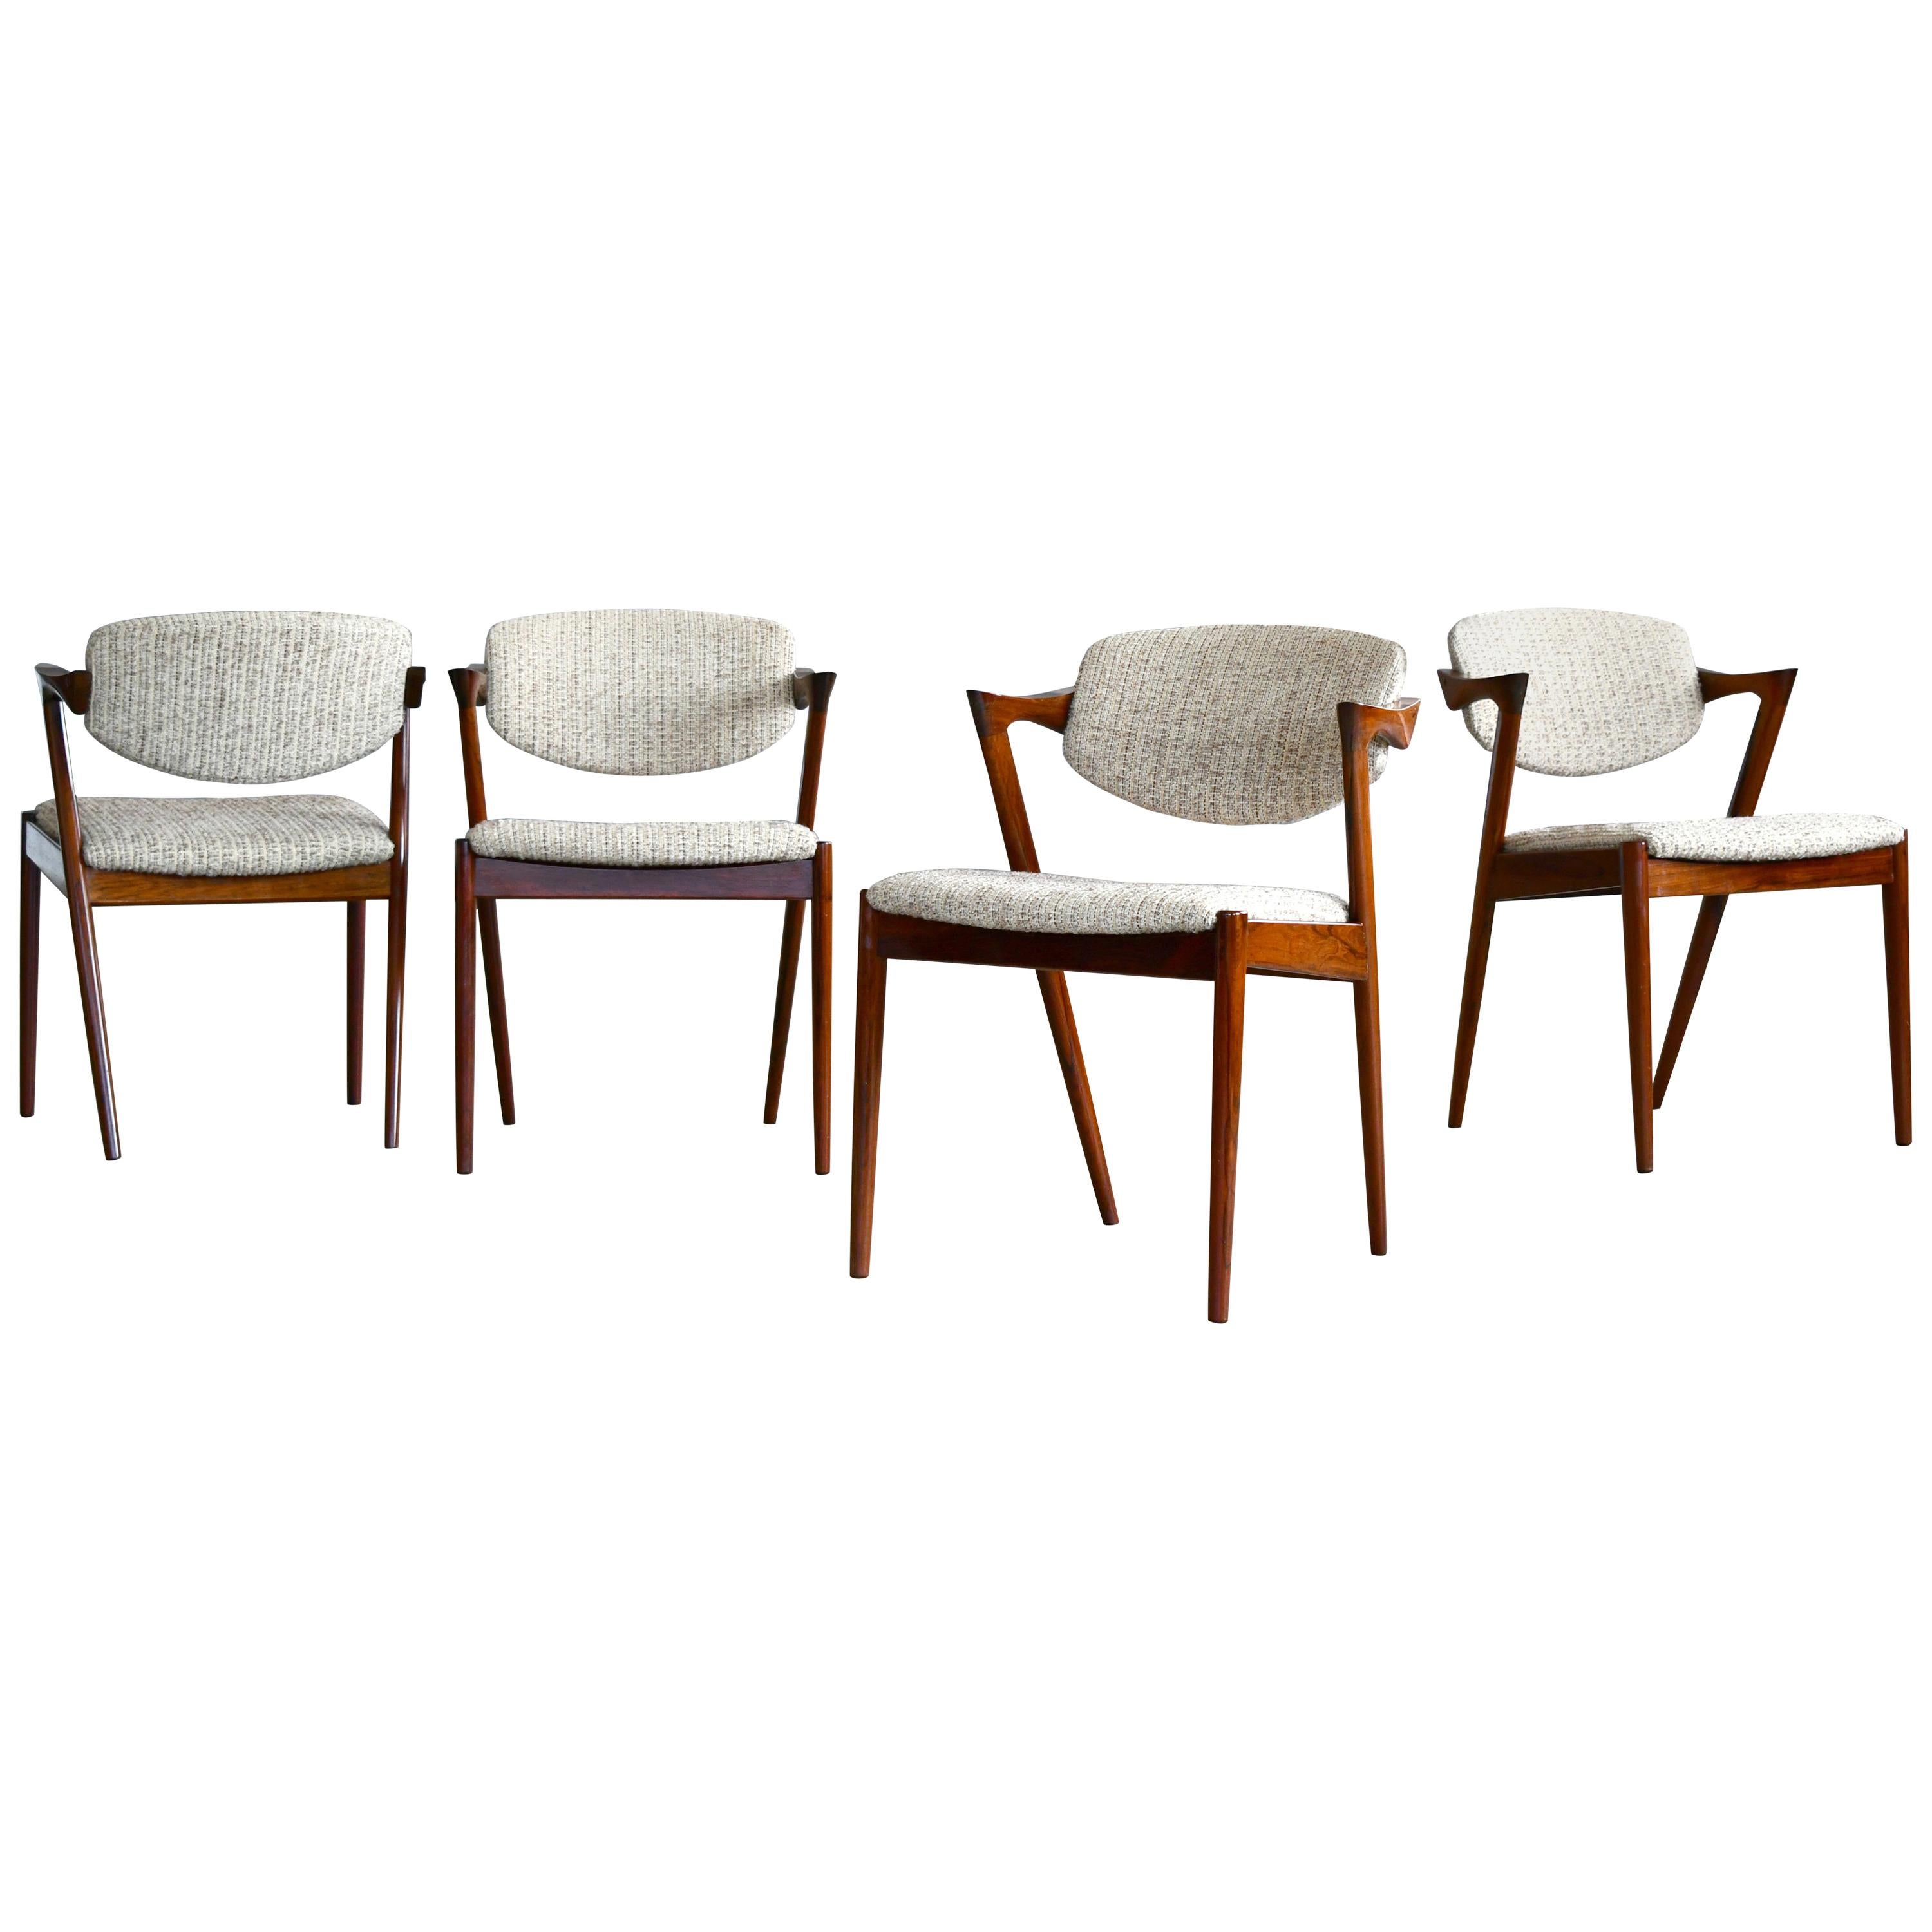 Set of Four Kai Kristiansen Model 42 Rosewood Dining Chairs Danish Midcentury